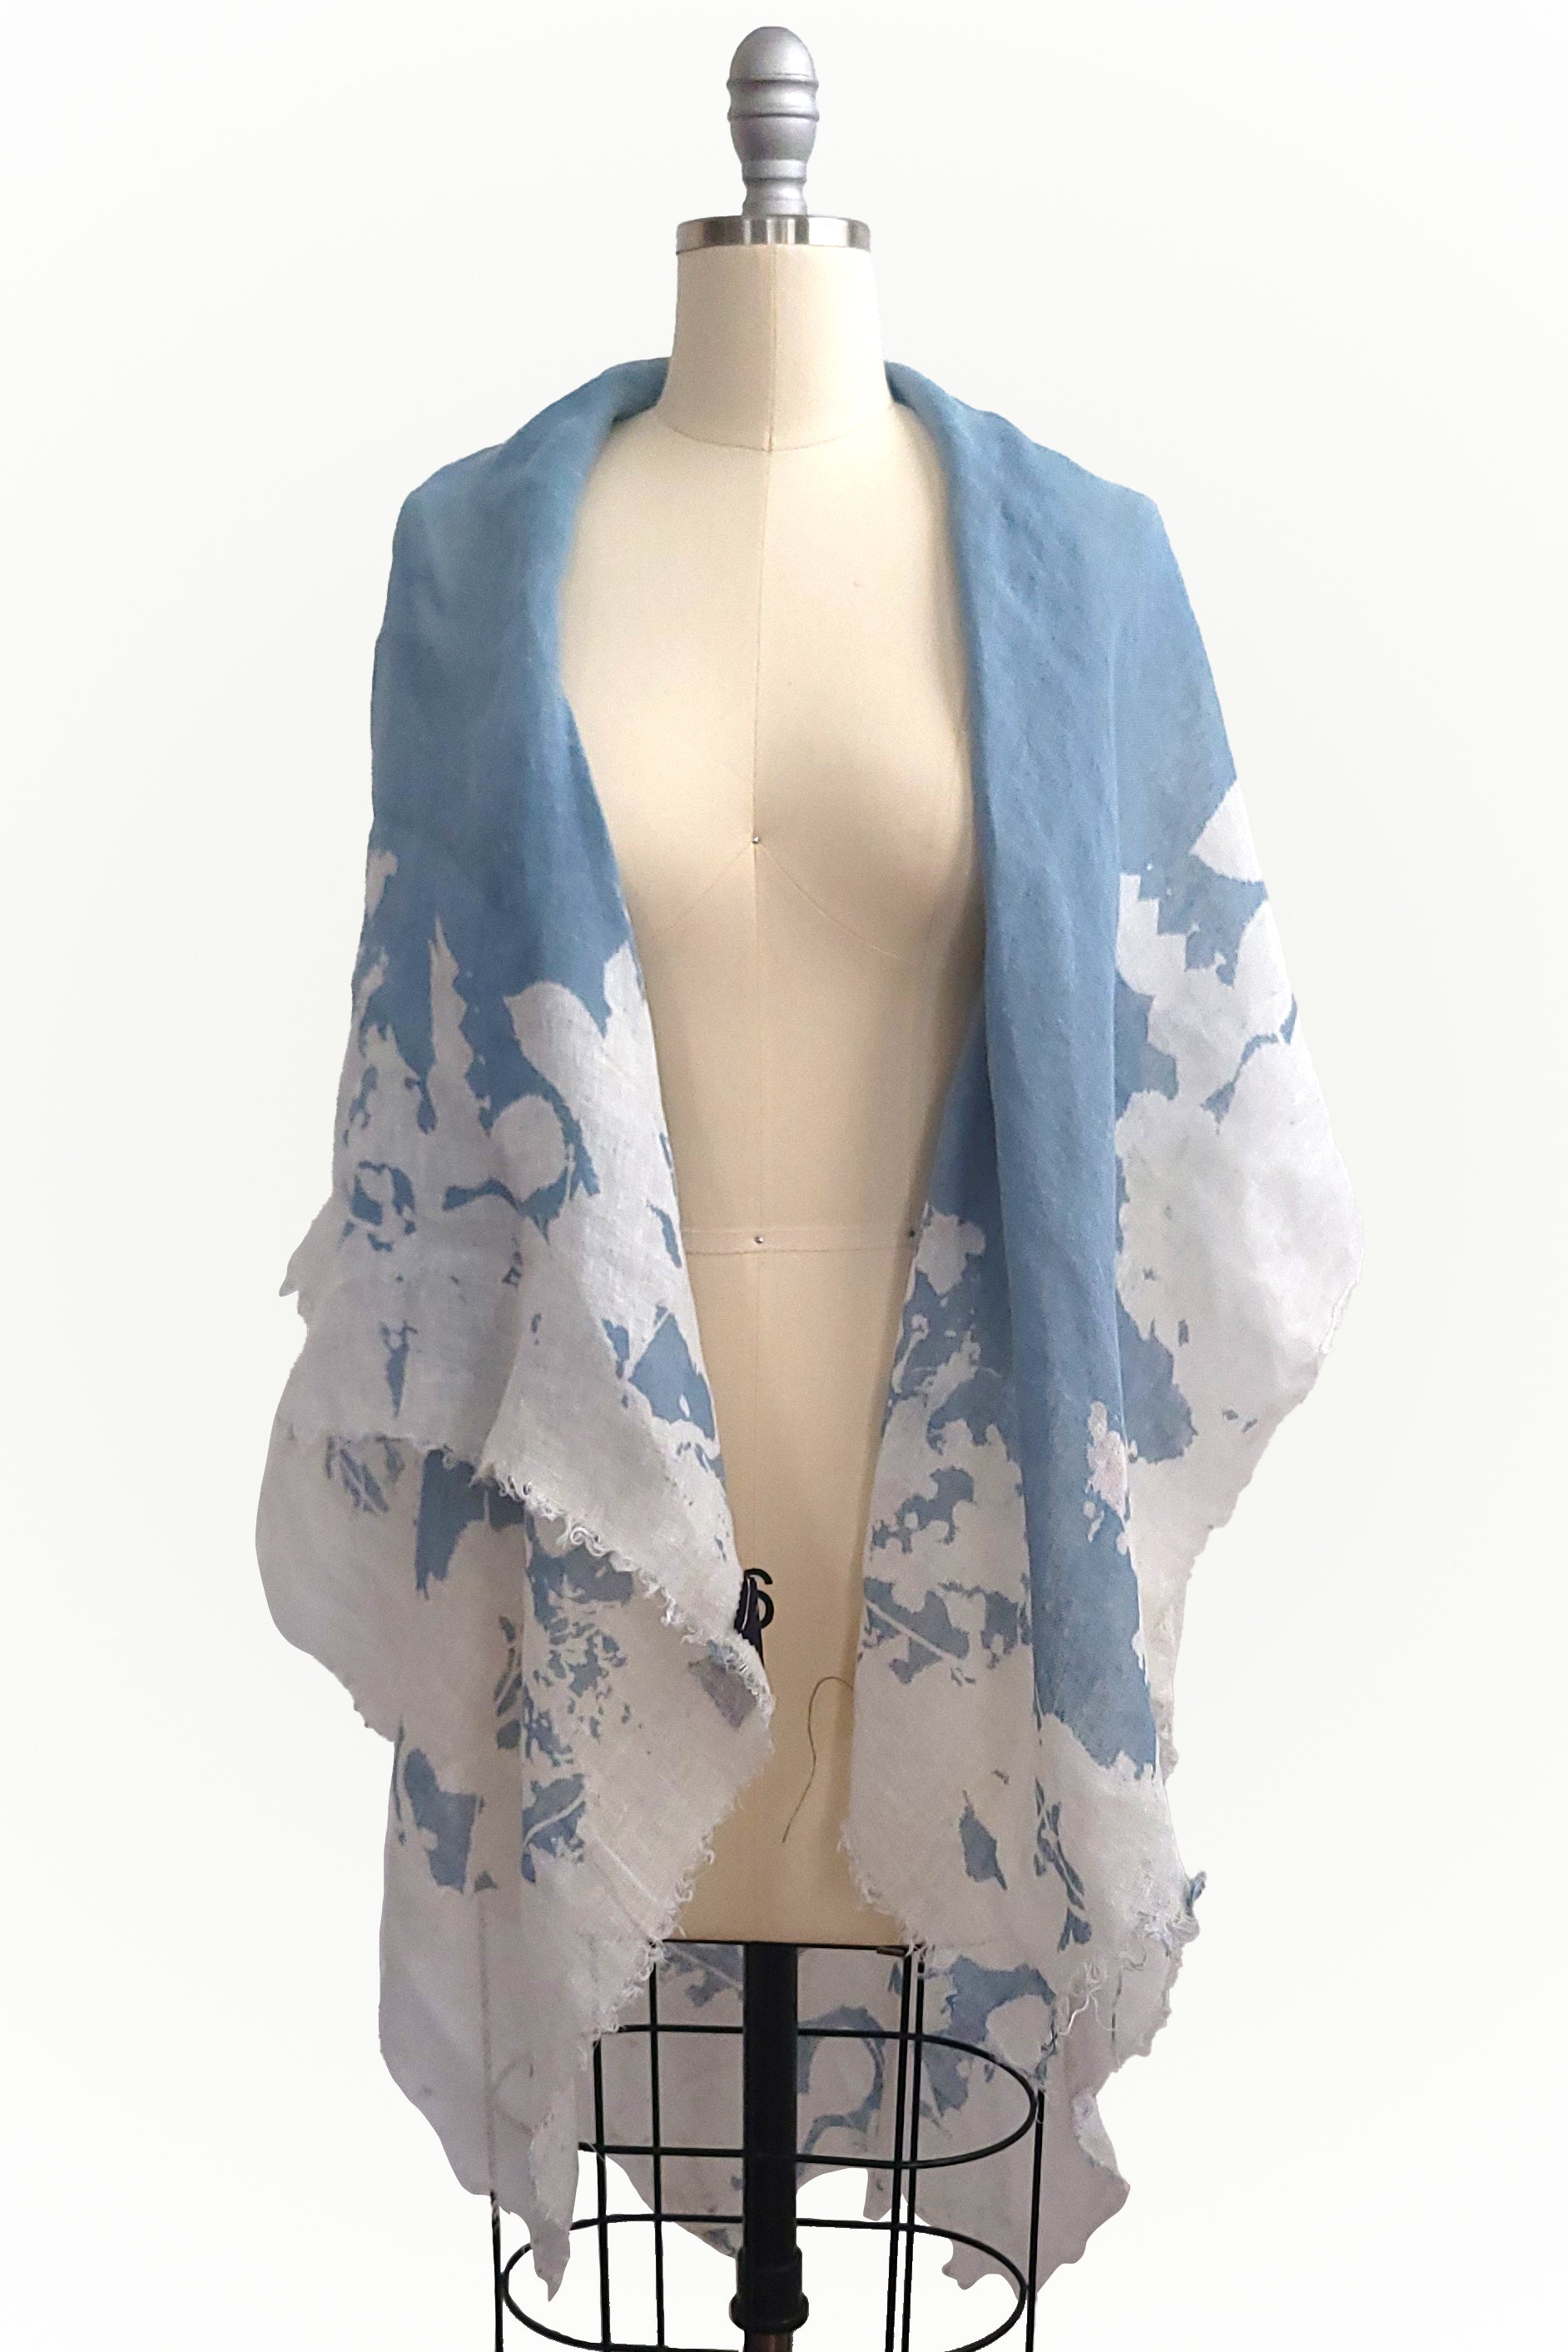 Asymmetrical Wrap Vest - Open Weave Linen w/ Bramble Print - Made to Order